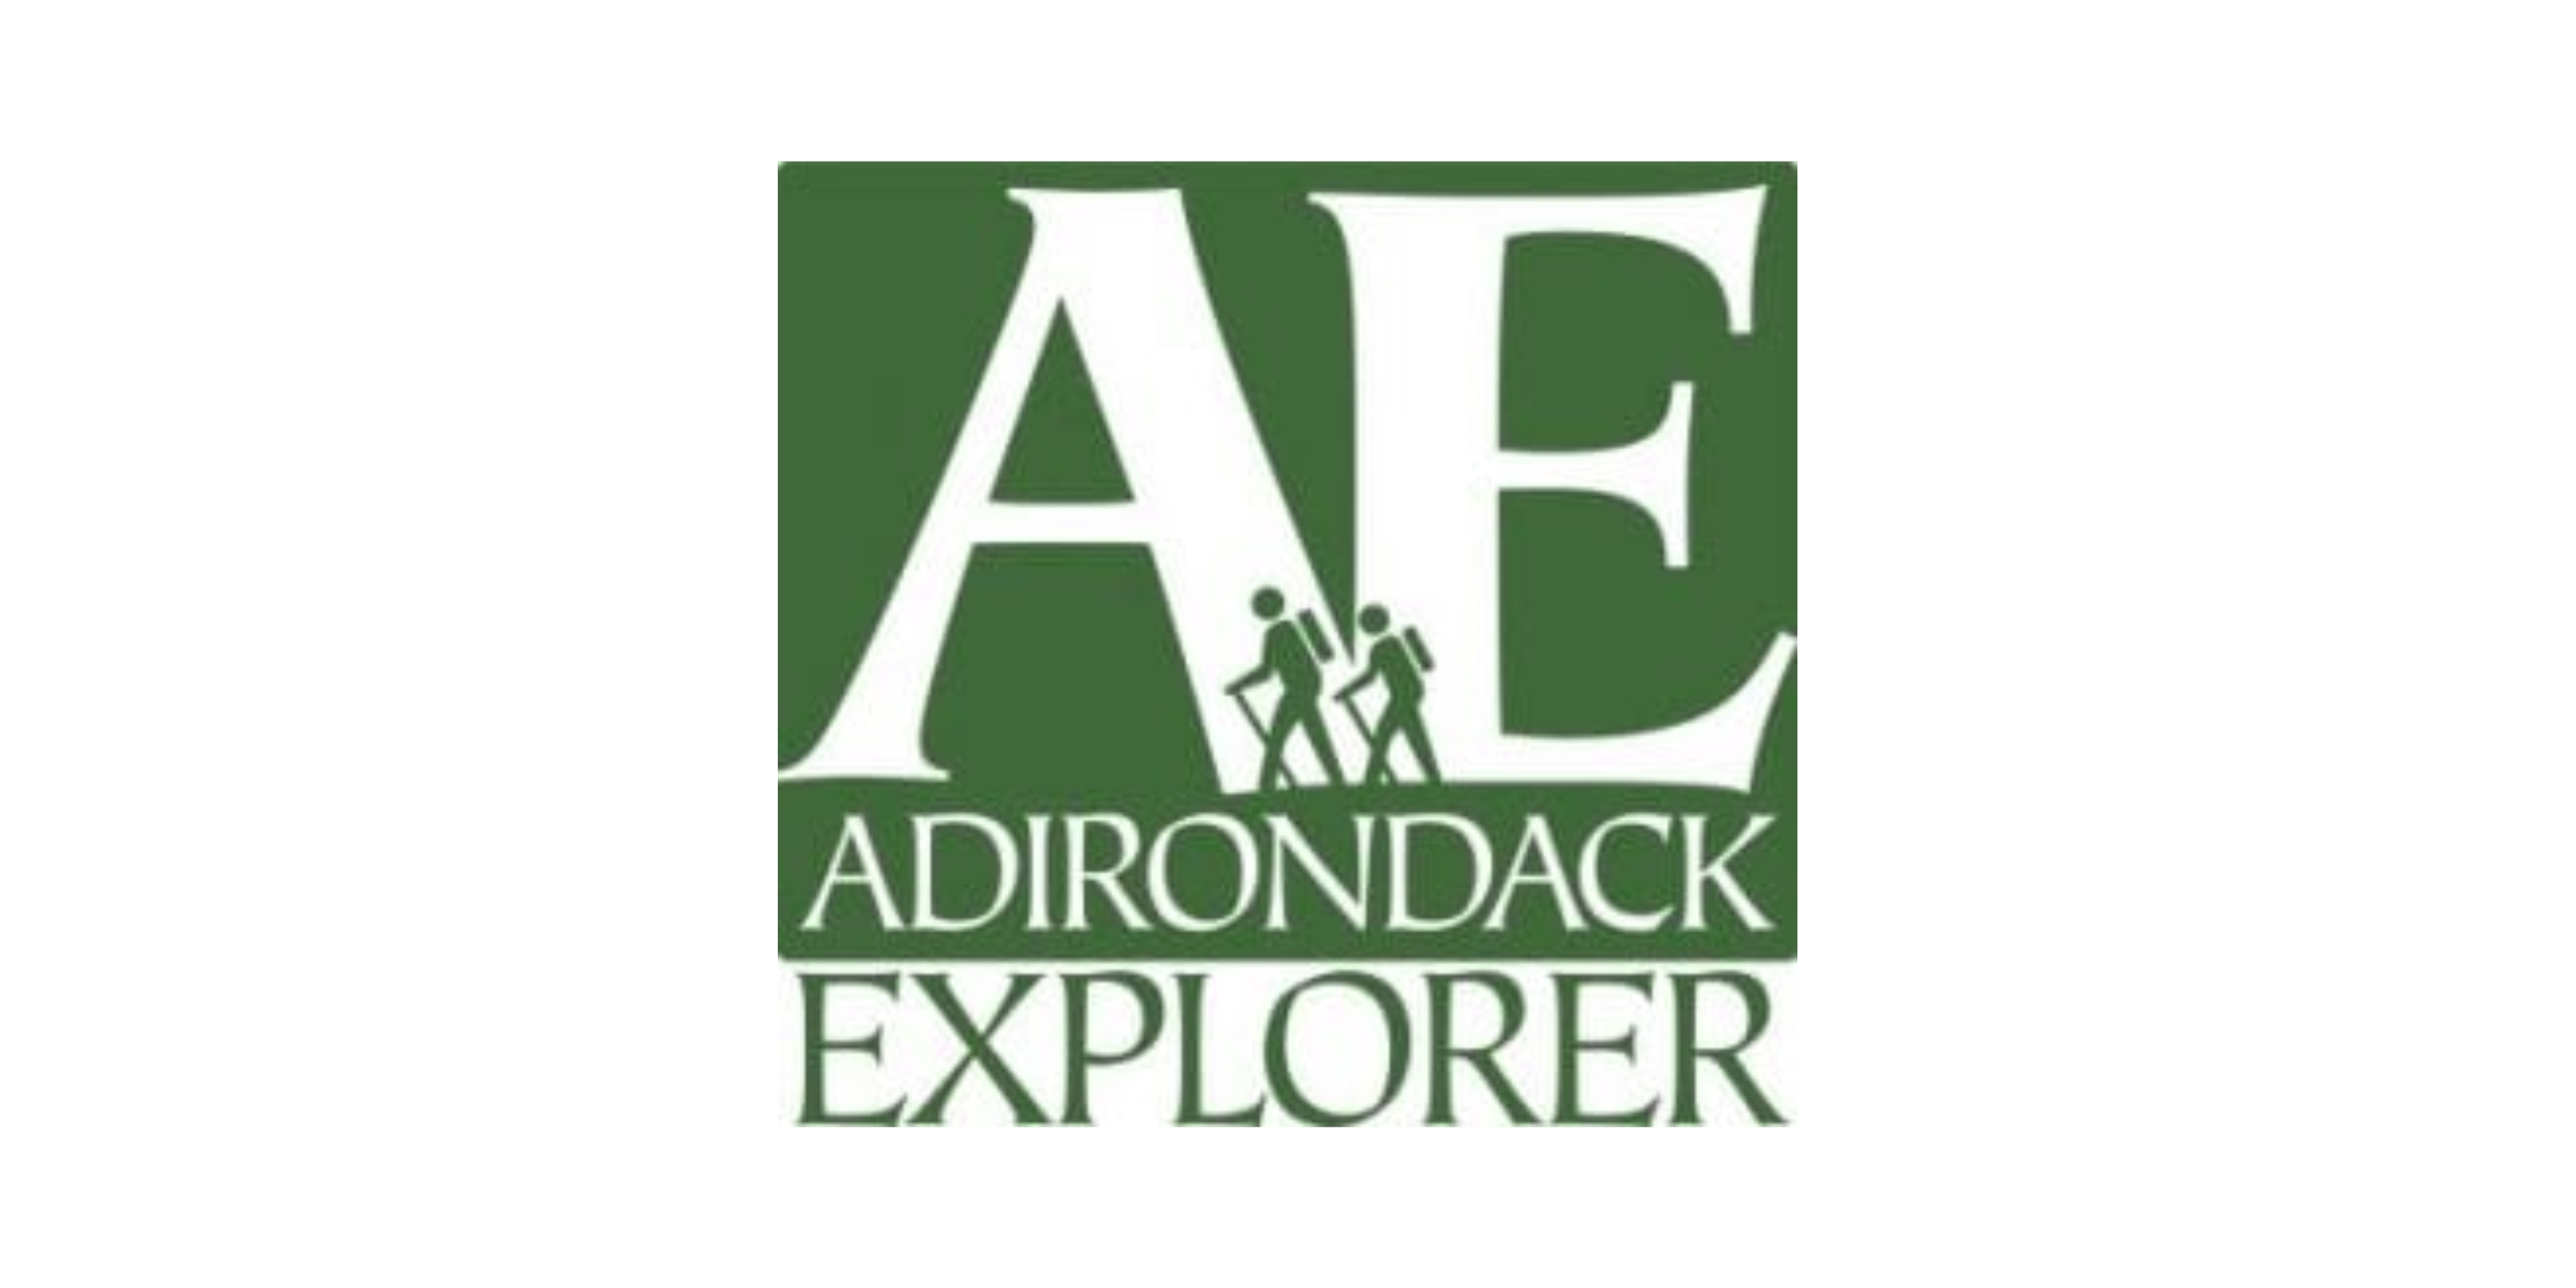 Adirondack Explorer Logo for article written about Birch Boys Inc